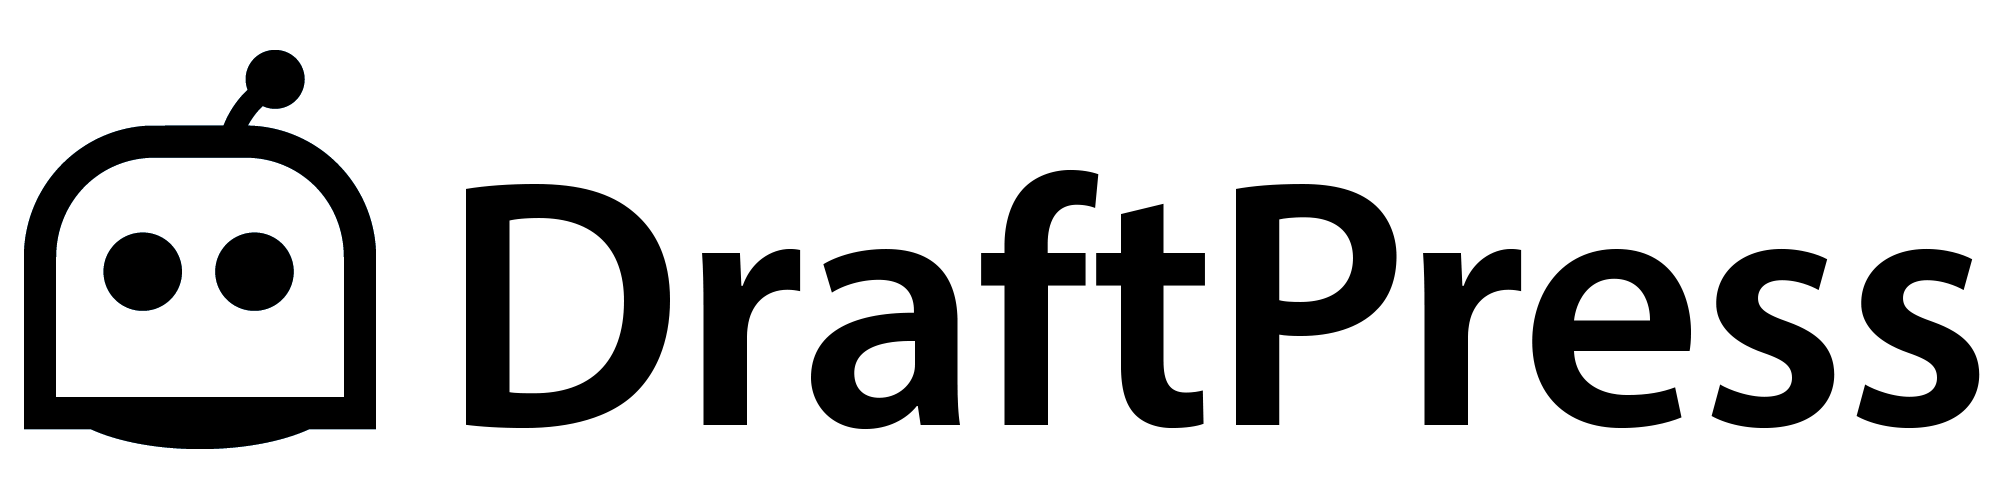 draftpress-logo